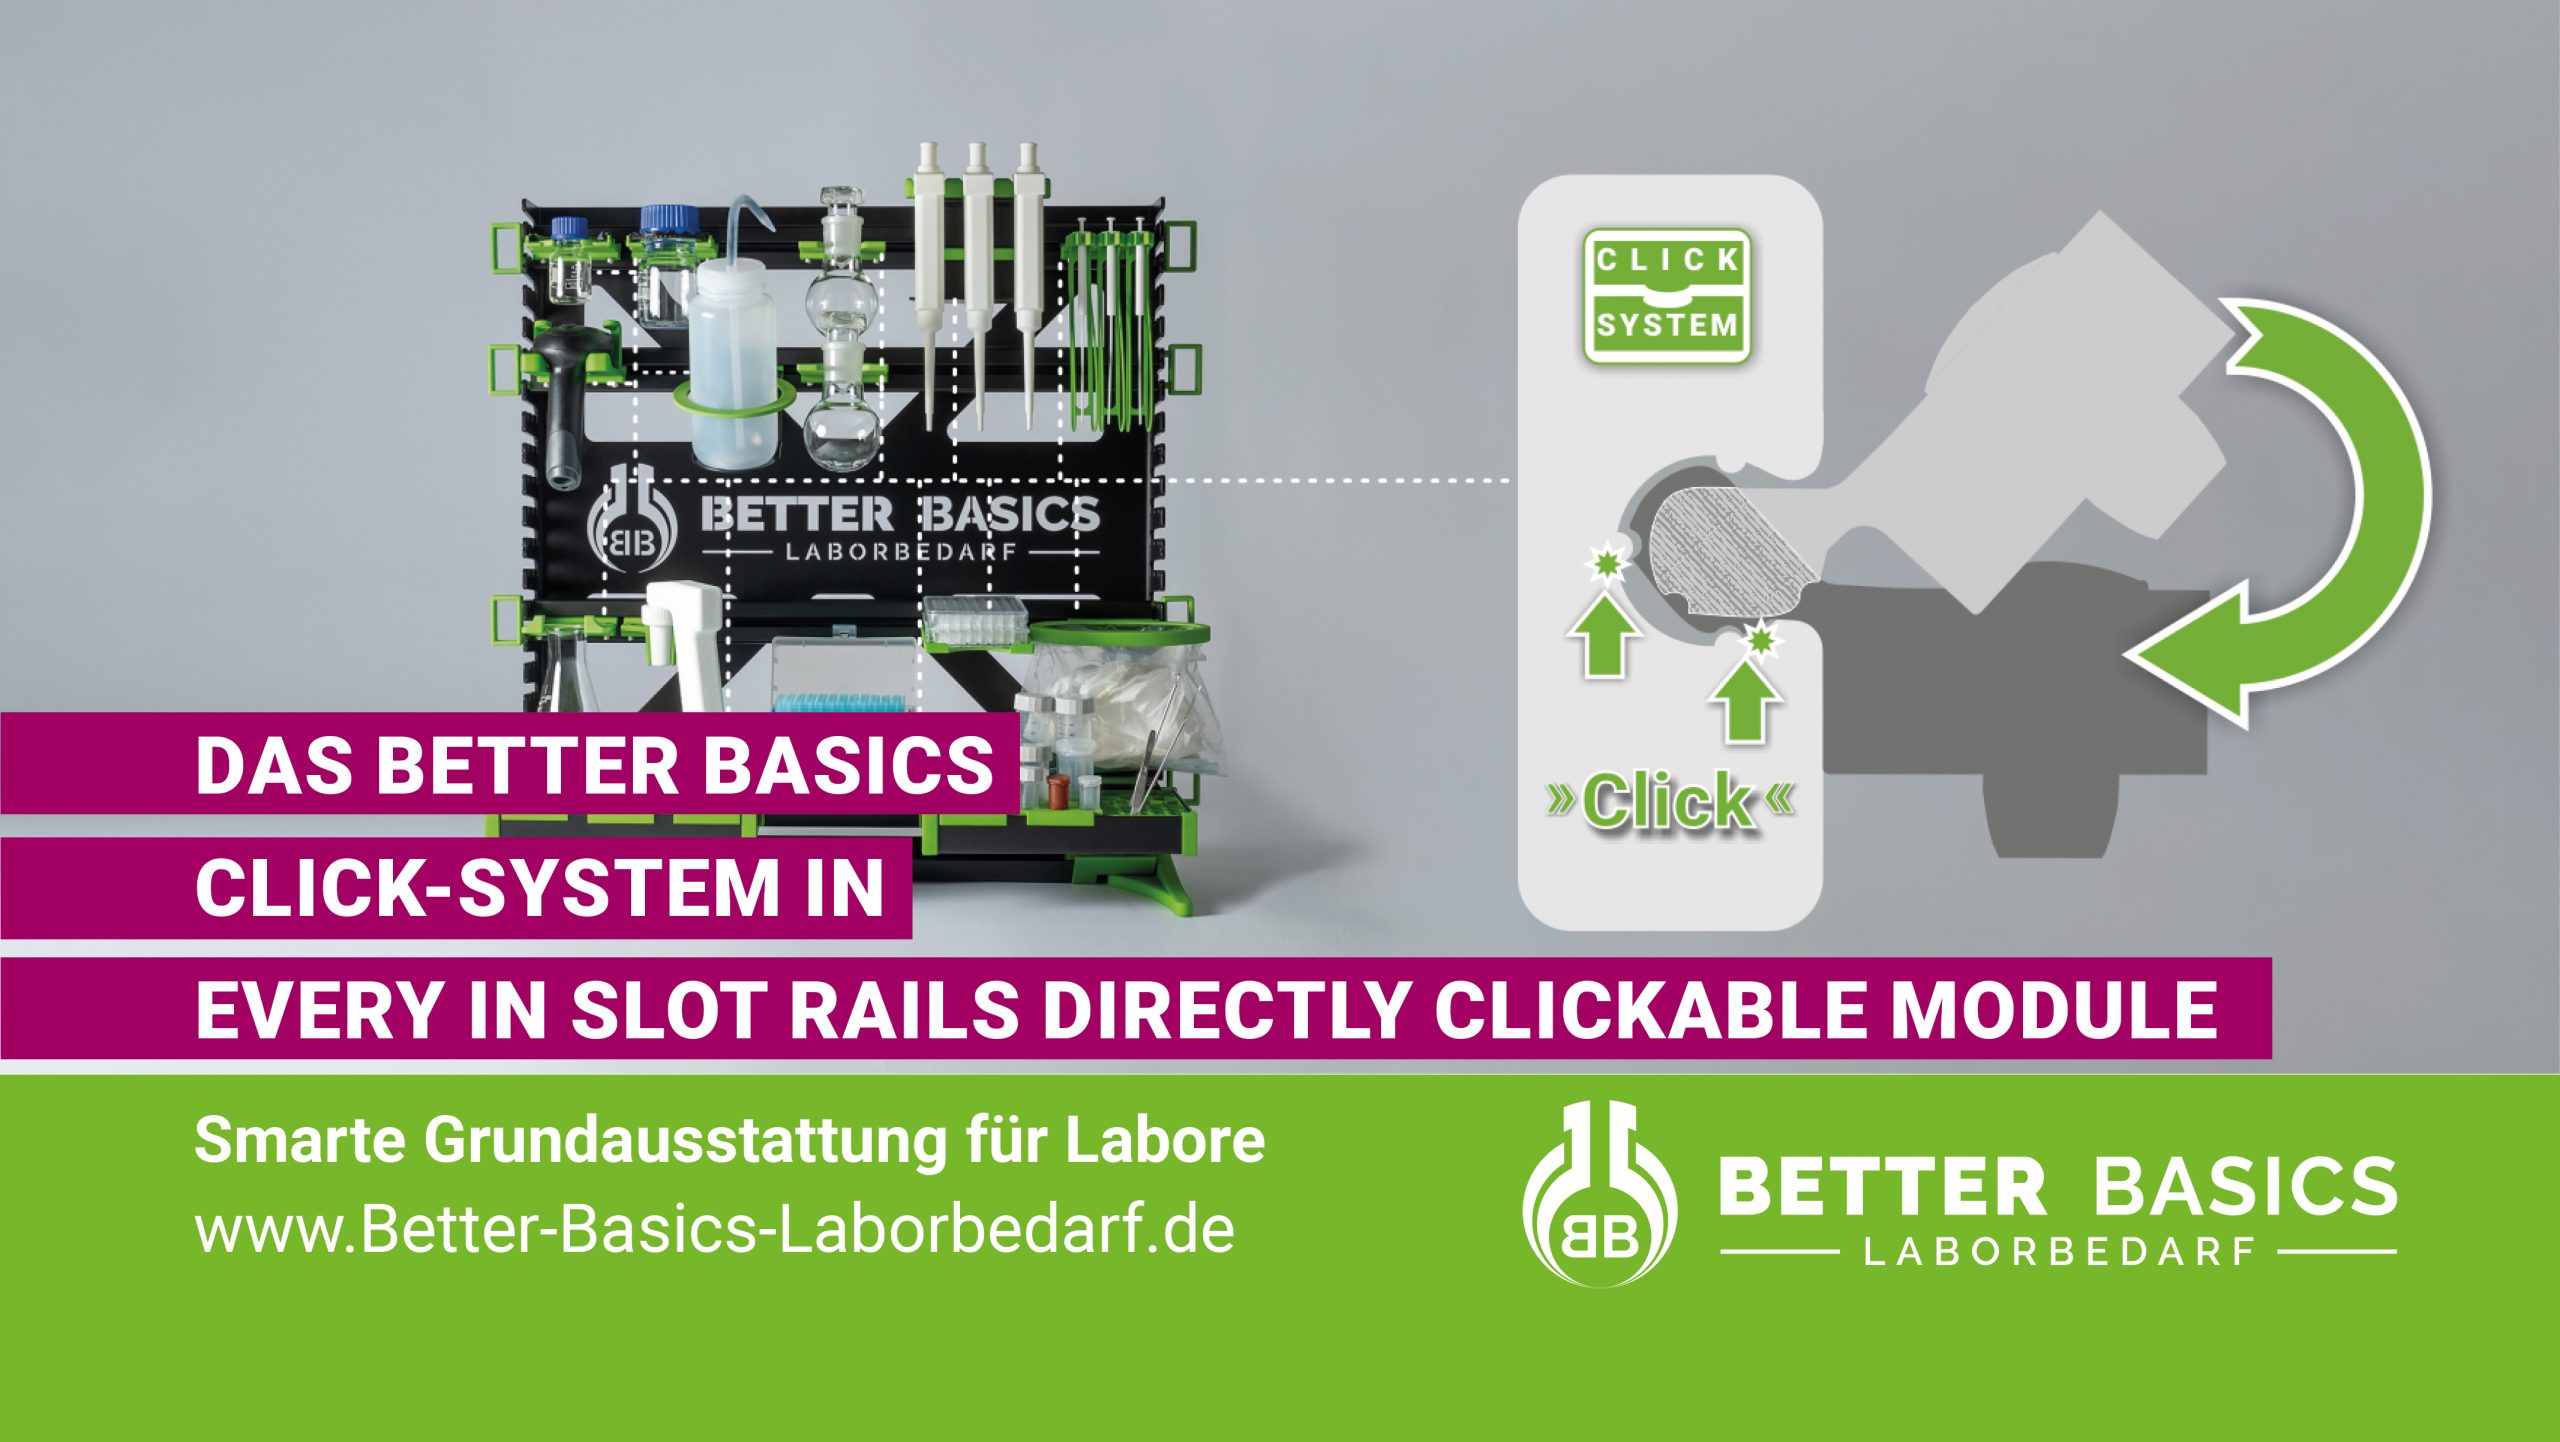 The Better Basics click-system